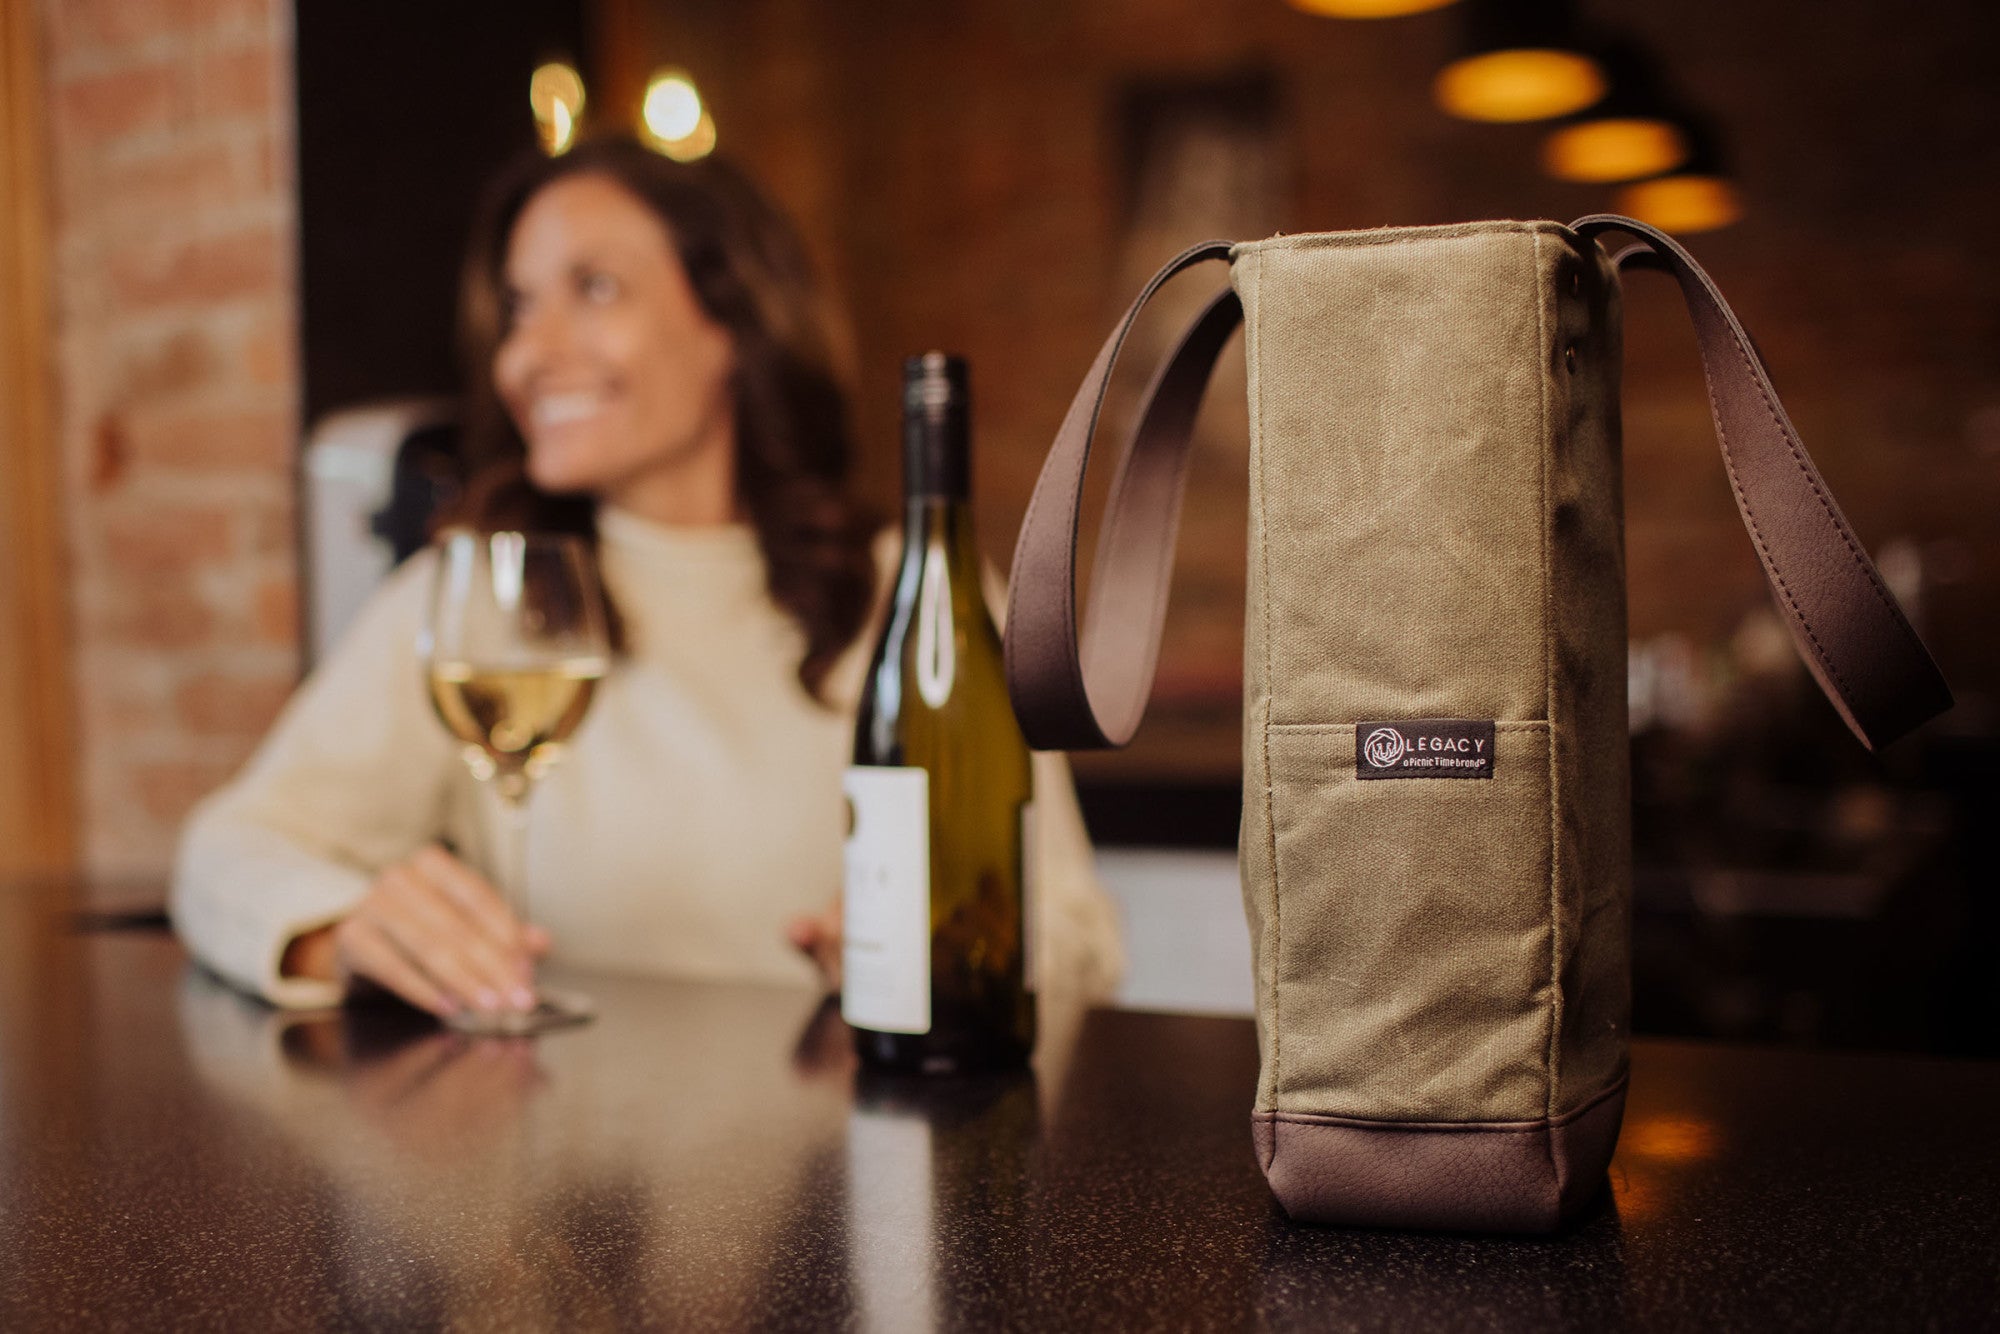 South Carolina Gamecocks - 2 Bottle Insulated Wine Cooler Bag